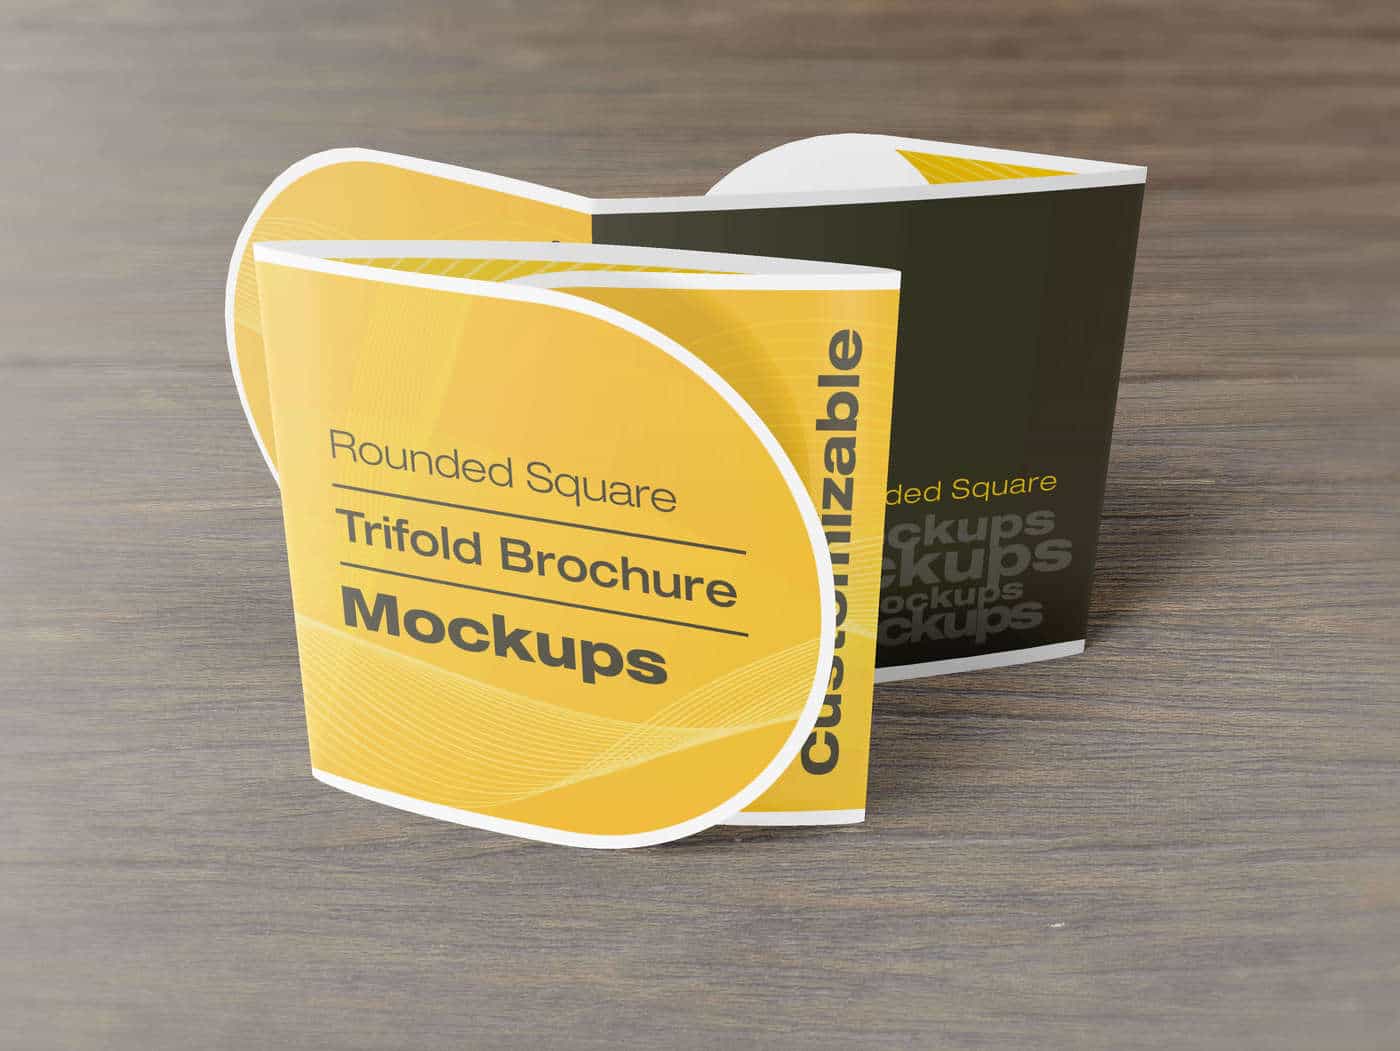  Rounded Square Tri-Fold Brochure Mockups 